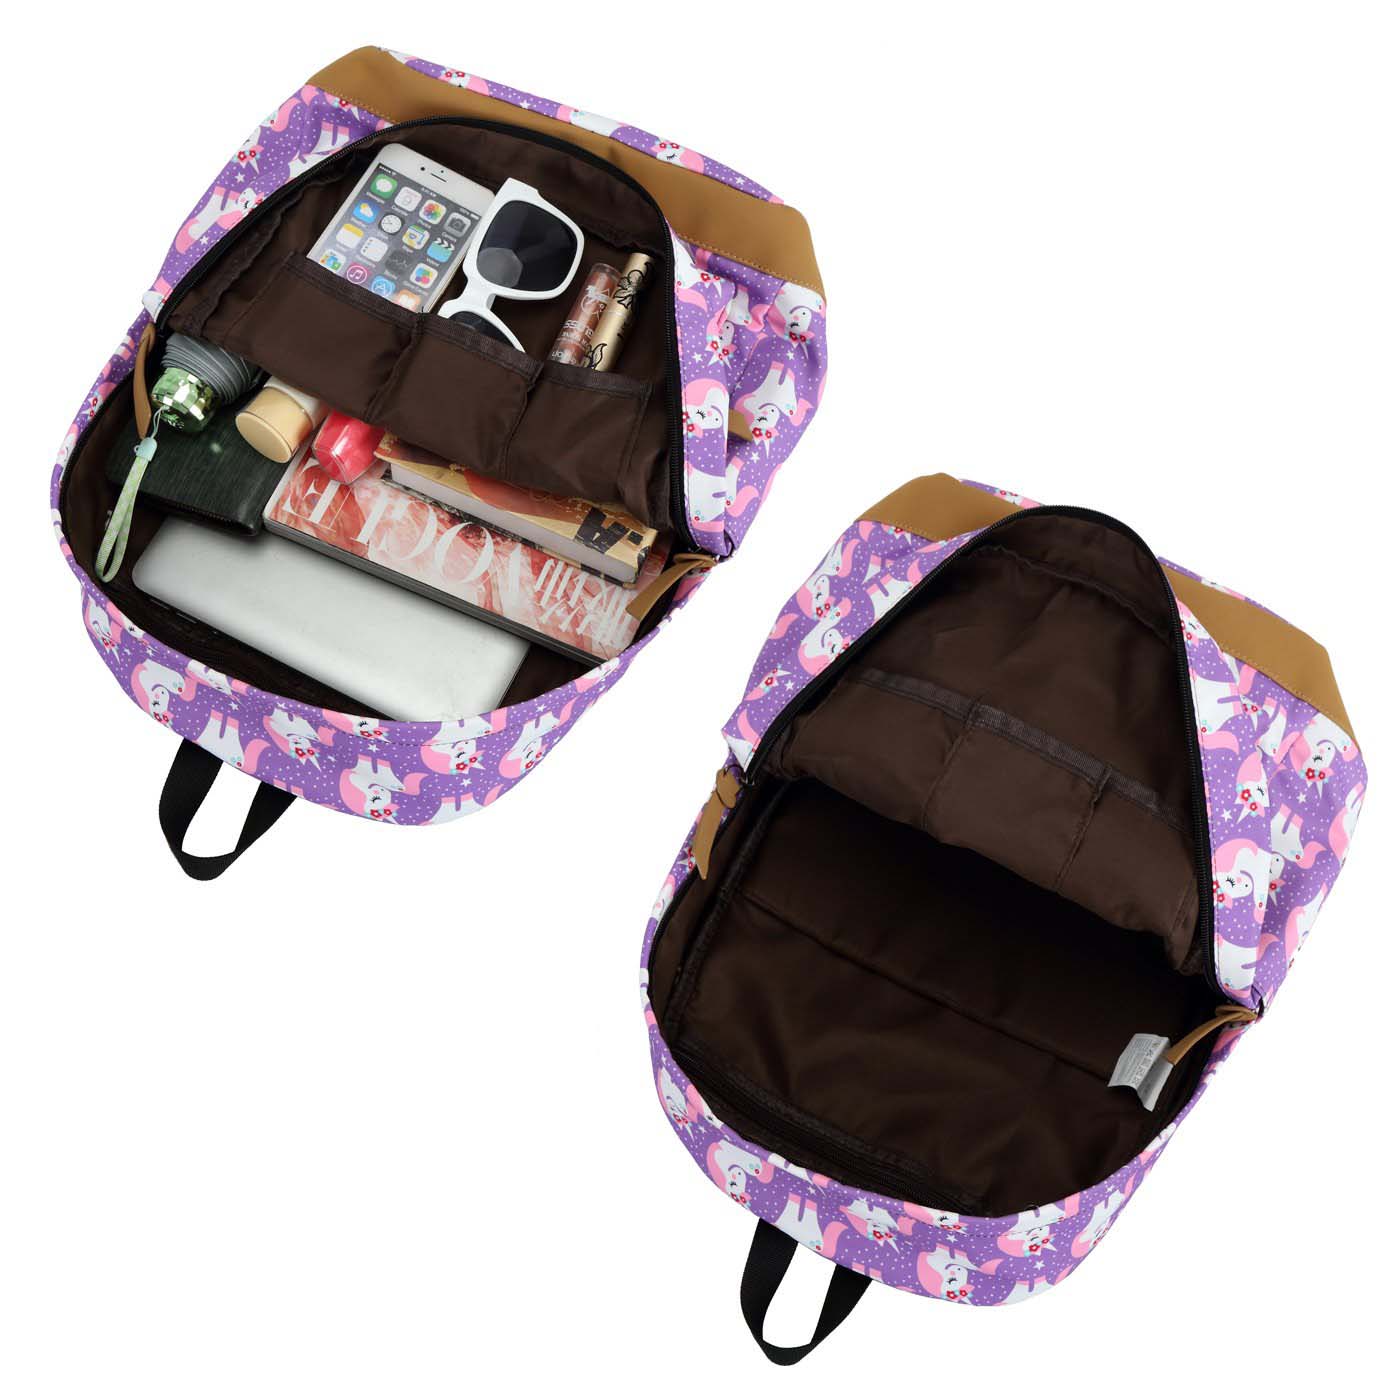 Factory Price For Backpack For Children - School Backpack for Girls Cute Teens School Bag Bookbags Set Travel Daypack – Twinkling Star